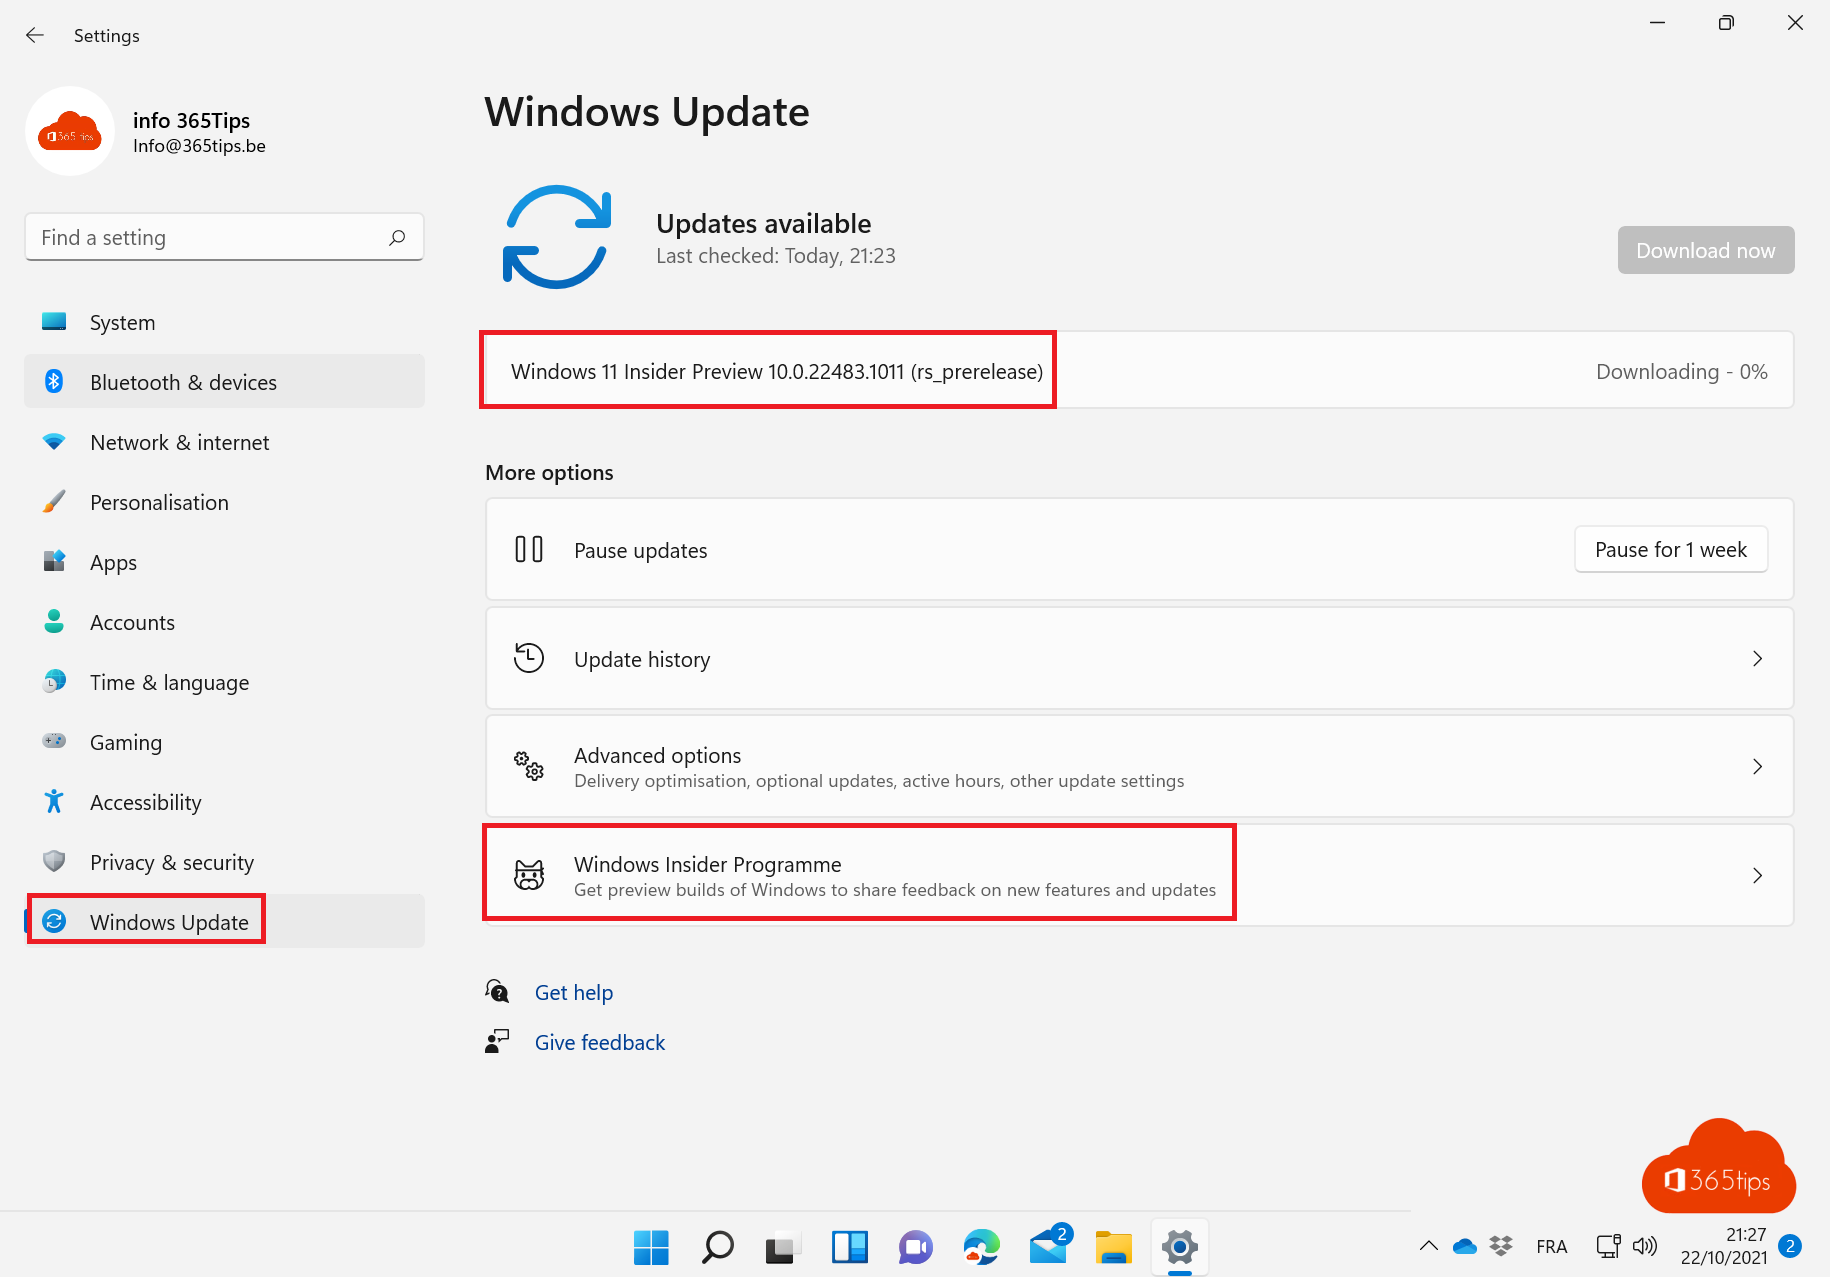 Getting into the Microsoft Windows Insider preview program  - Windows 11